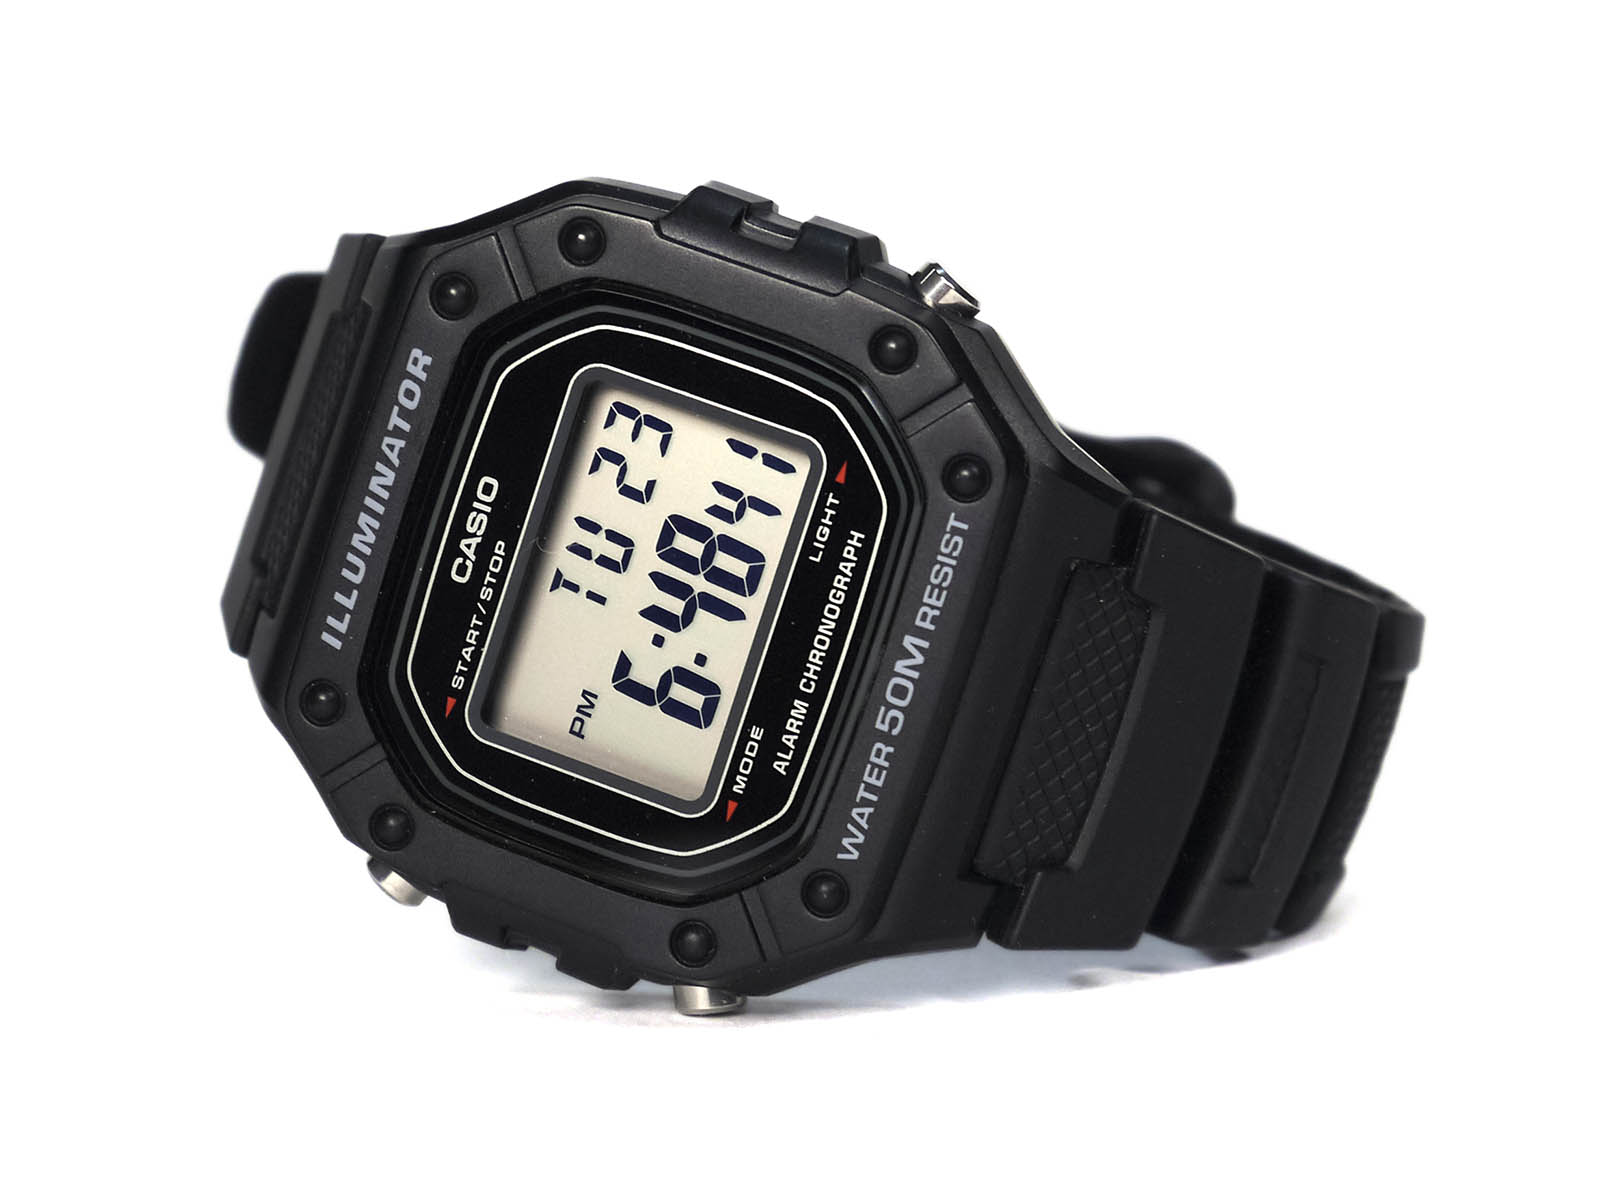 Casio W-218H-1AV Classic Watch ⋆ High Quality Watch Gallery